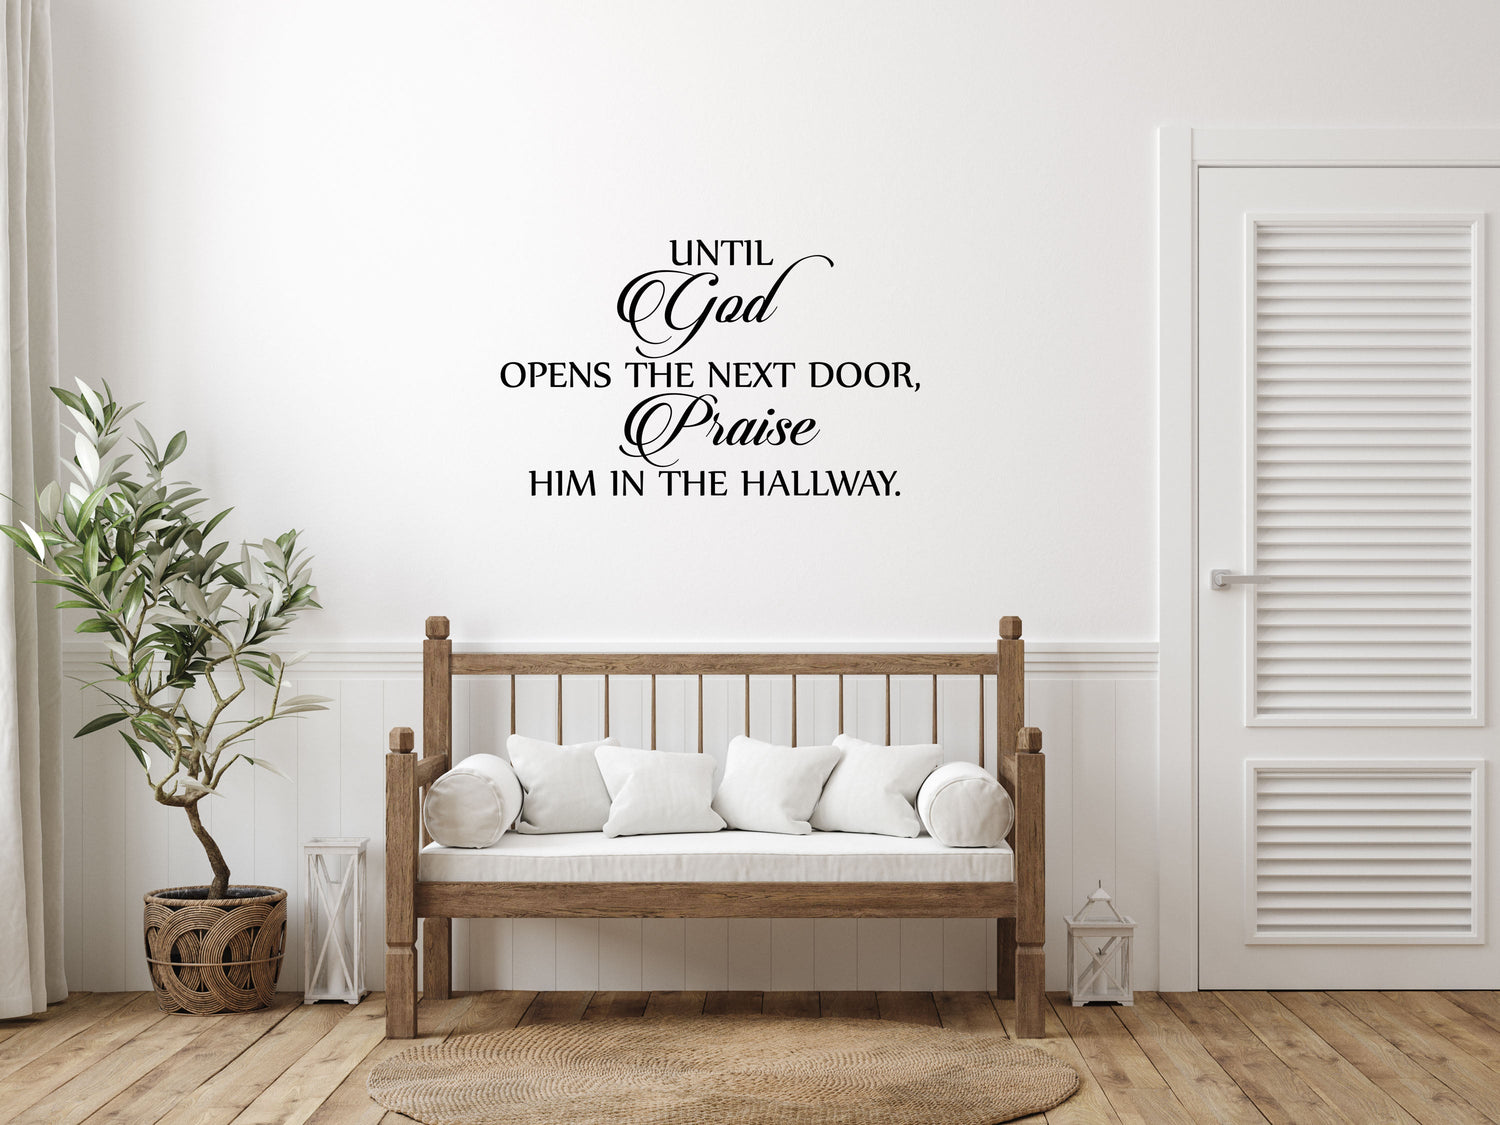 Until God Opens The Next Door, Praise Him In The Hallway - Inspirational Wall Decals Vinyl Wall Decal Inspirational Wall Signs 